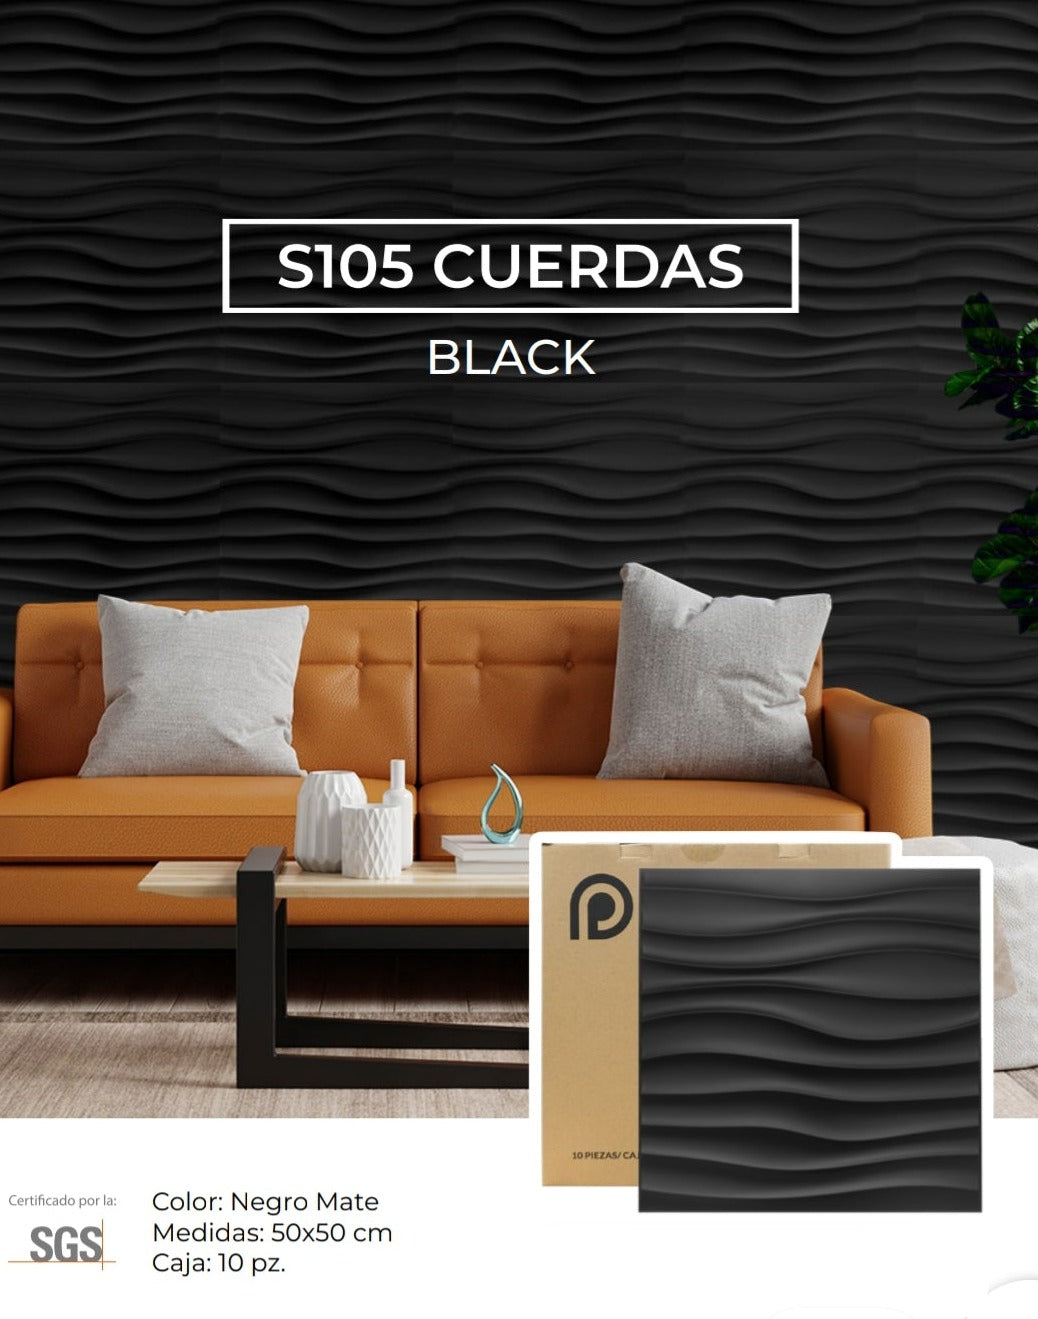 S105 CUERDAS BLACK